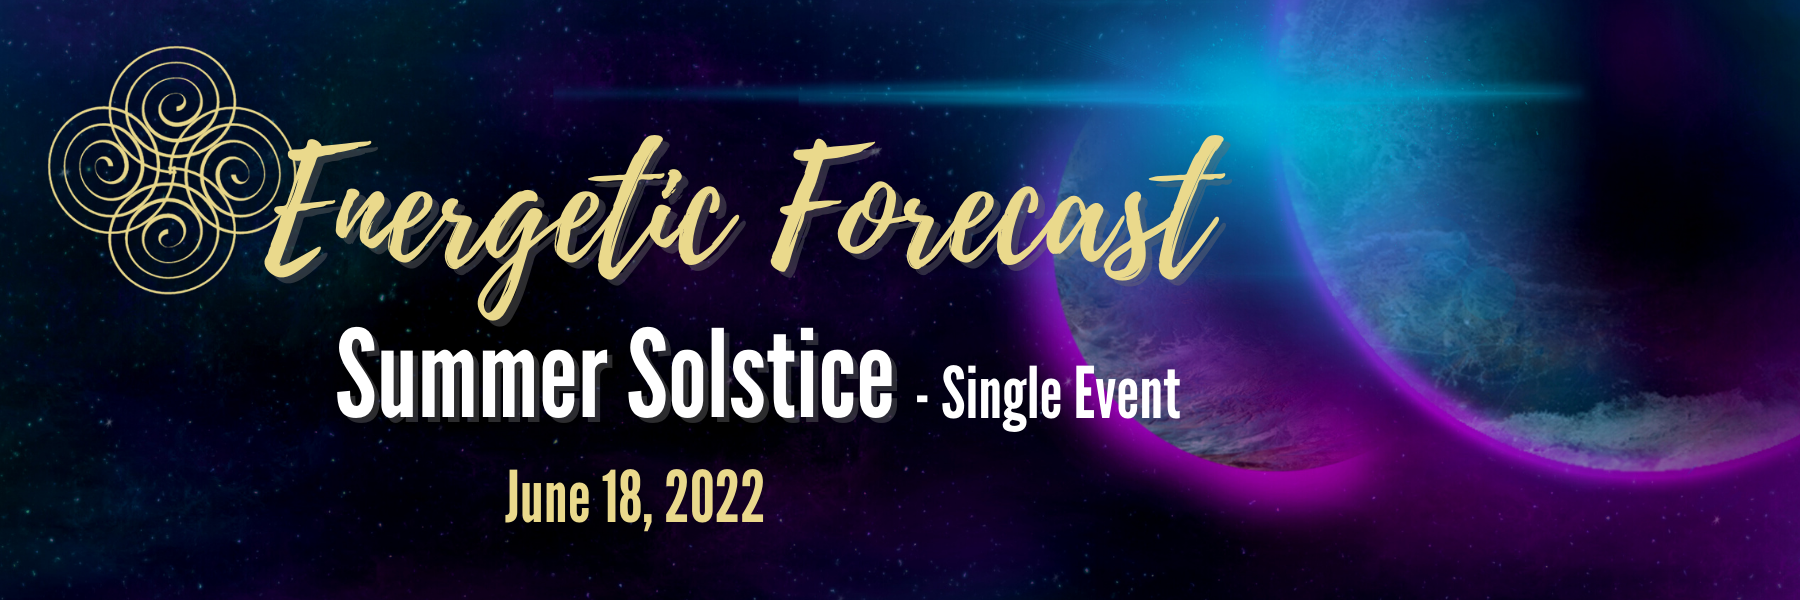 Energetic Forecast – Summer Solstice 2022 – Single Event